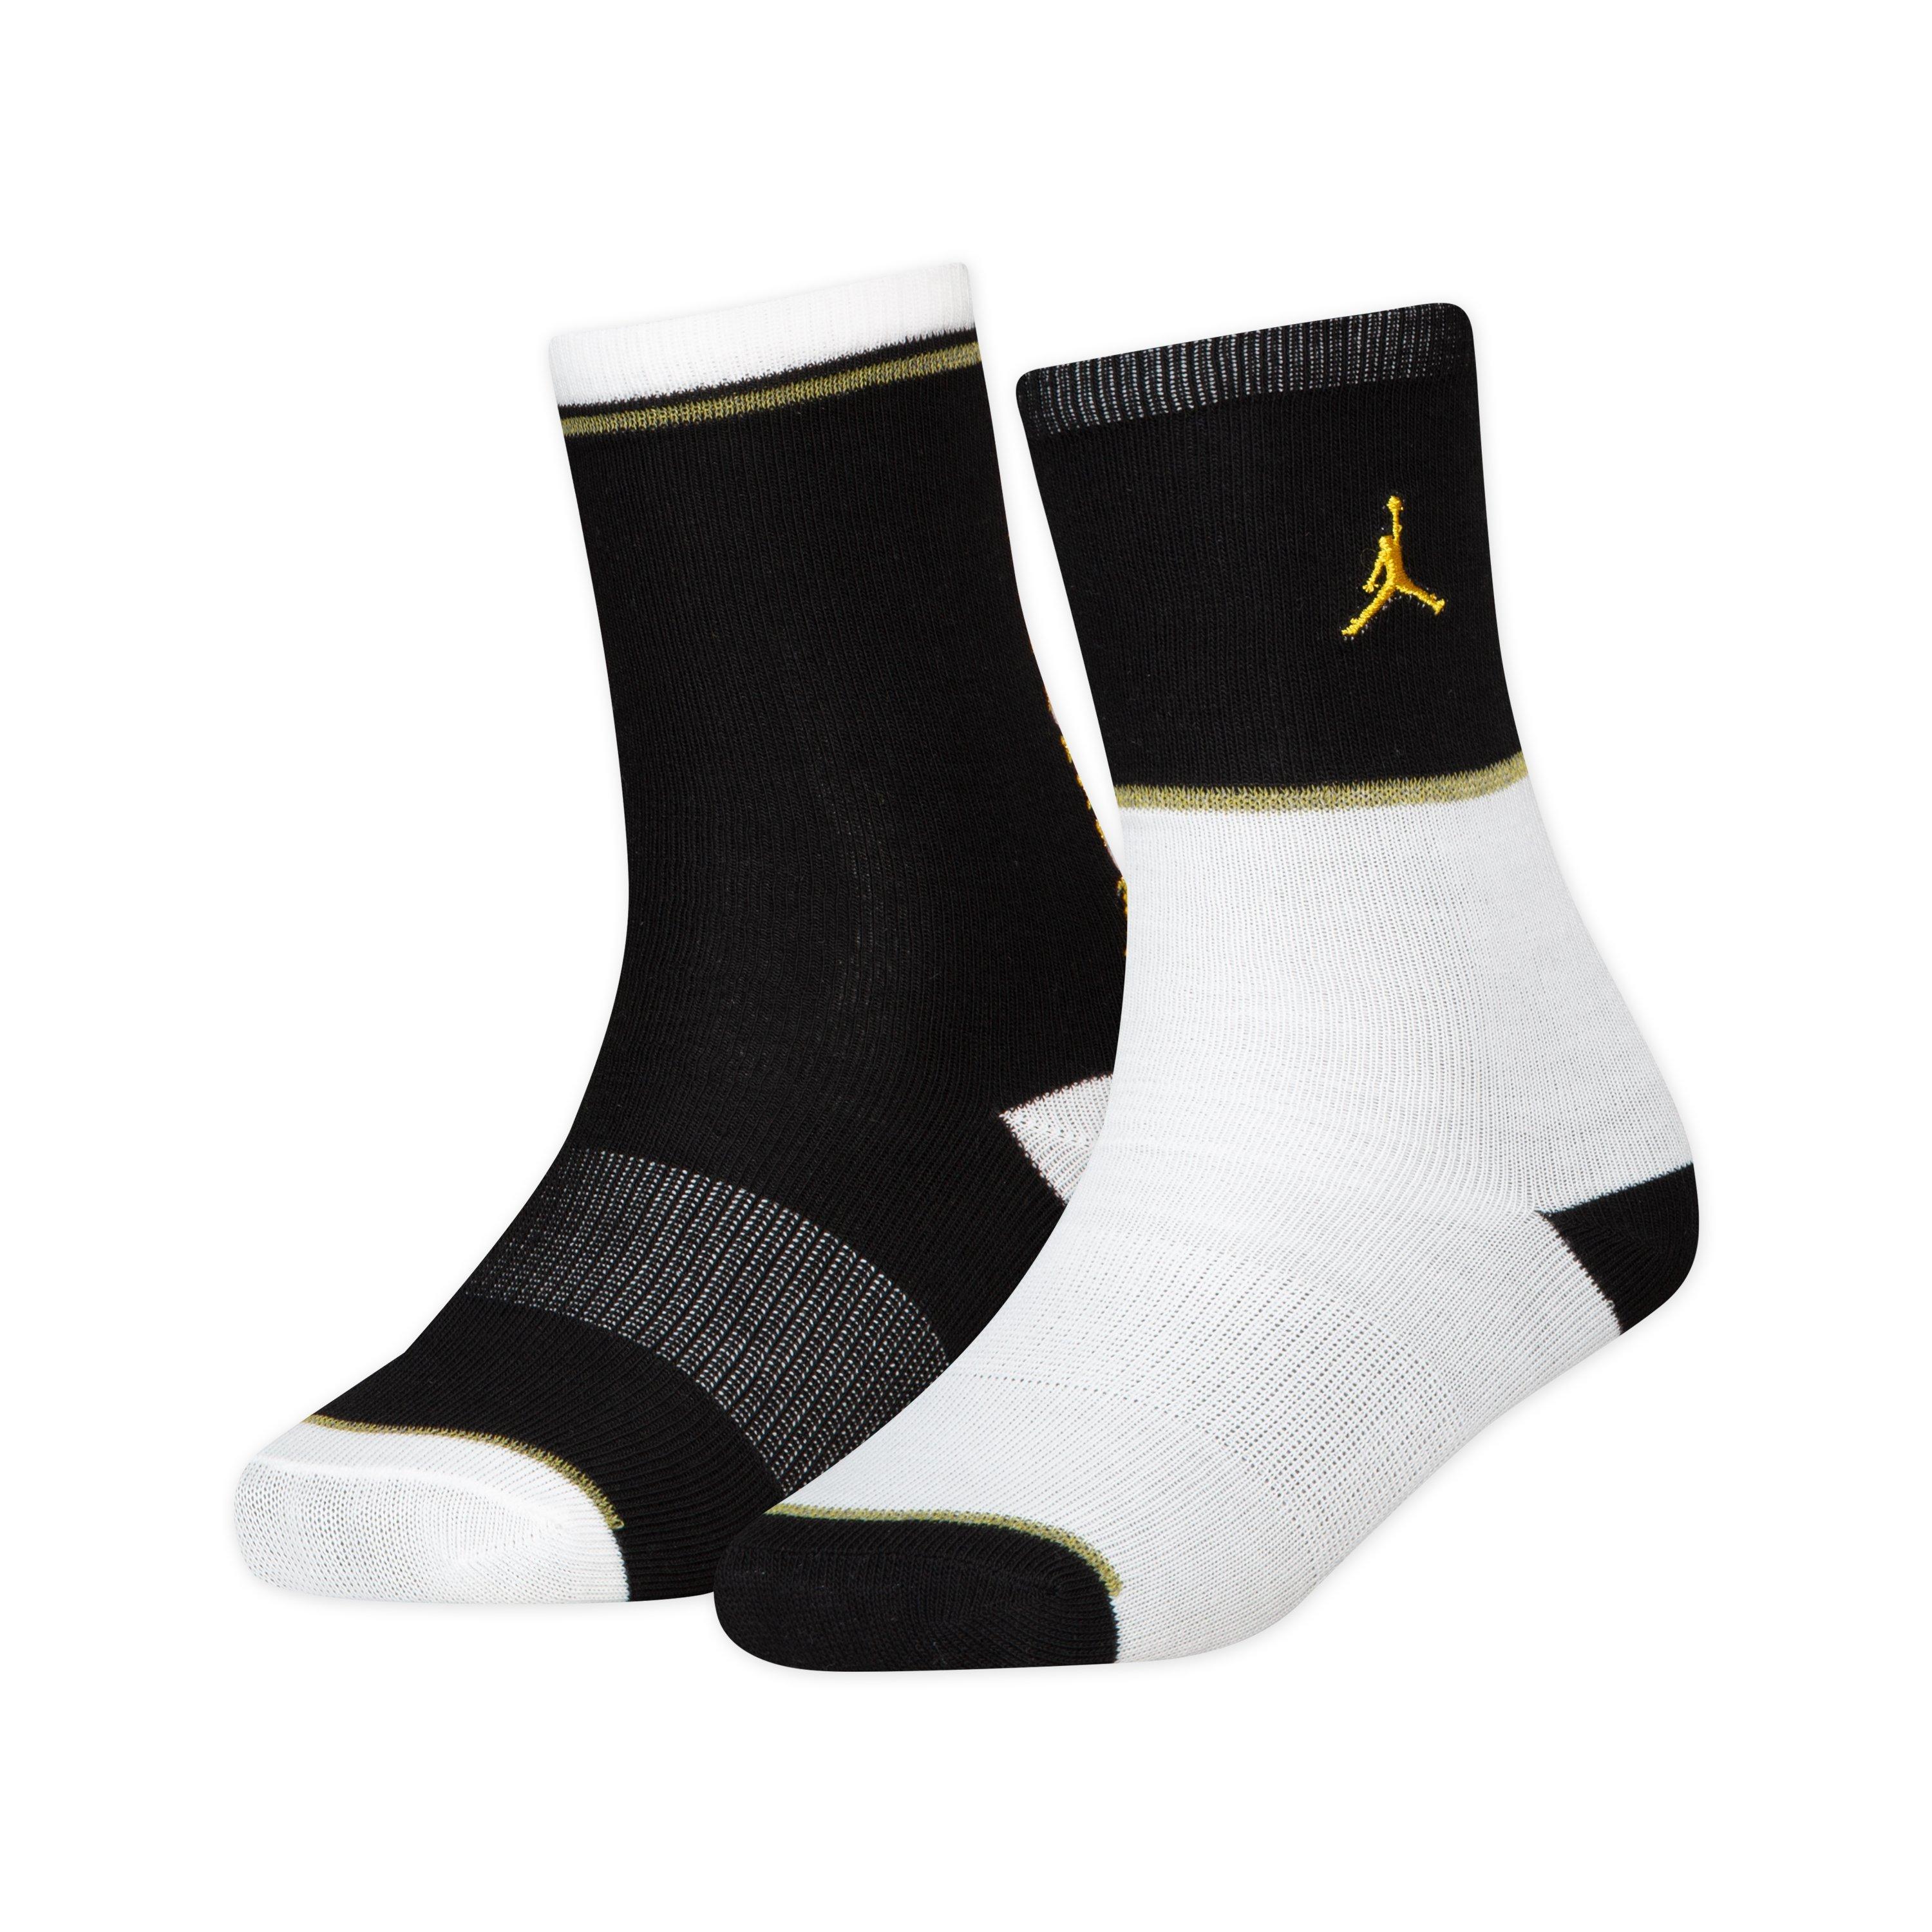 hibbett sports jordan socks